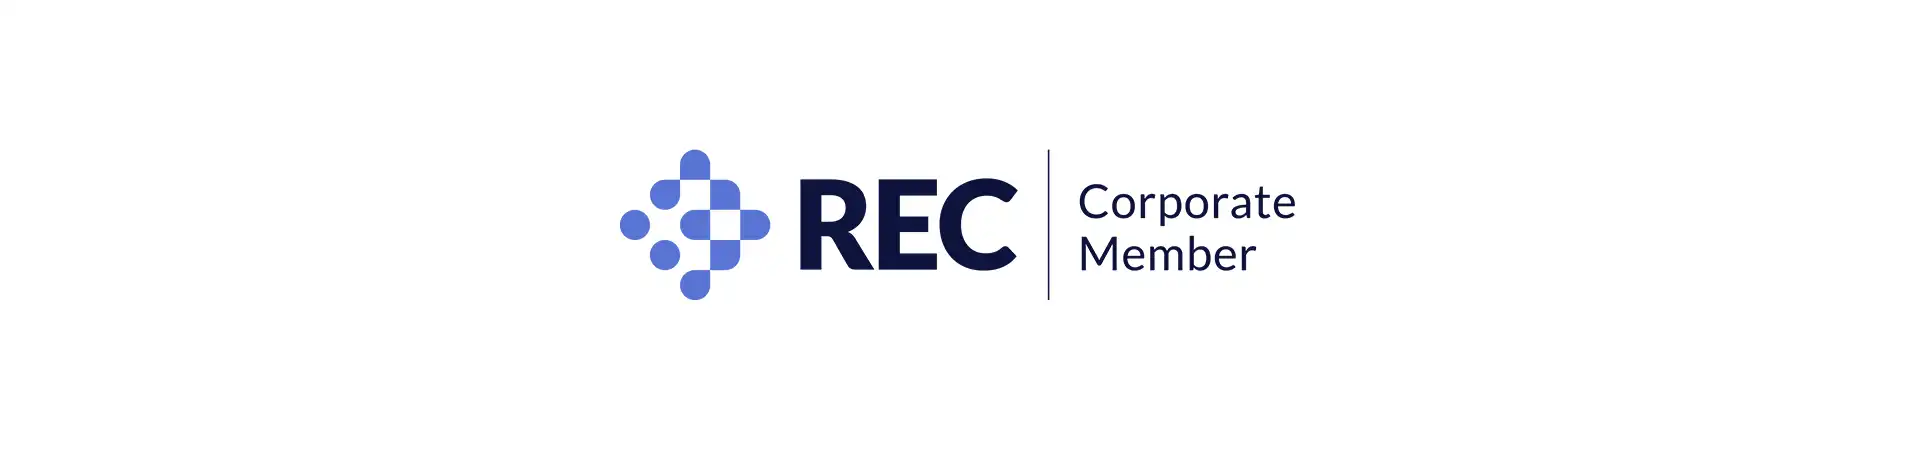 REC-Compliance-Test--HCP-achieves-100%